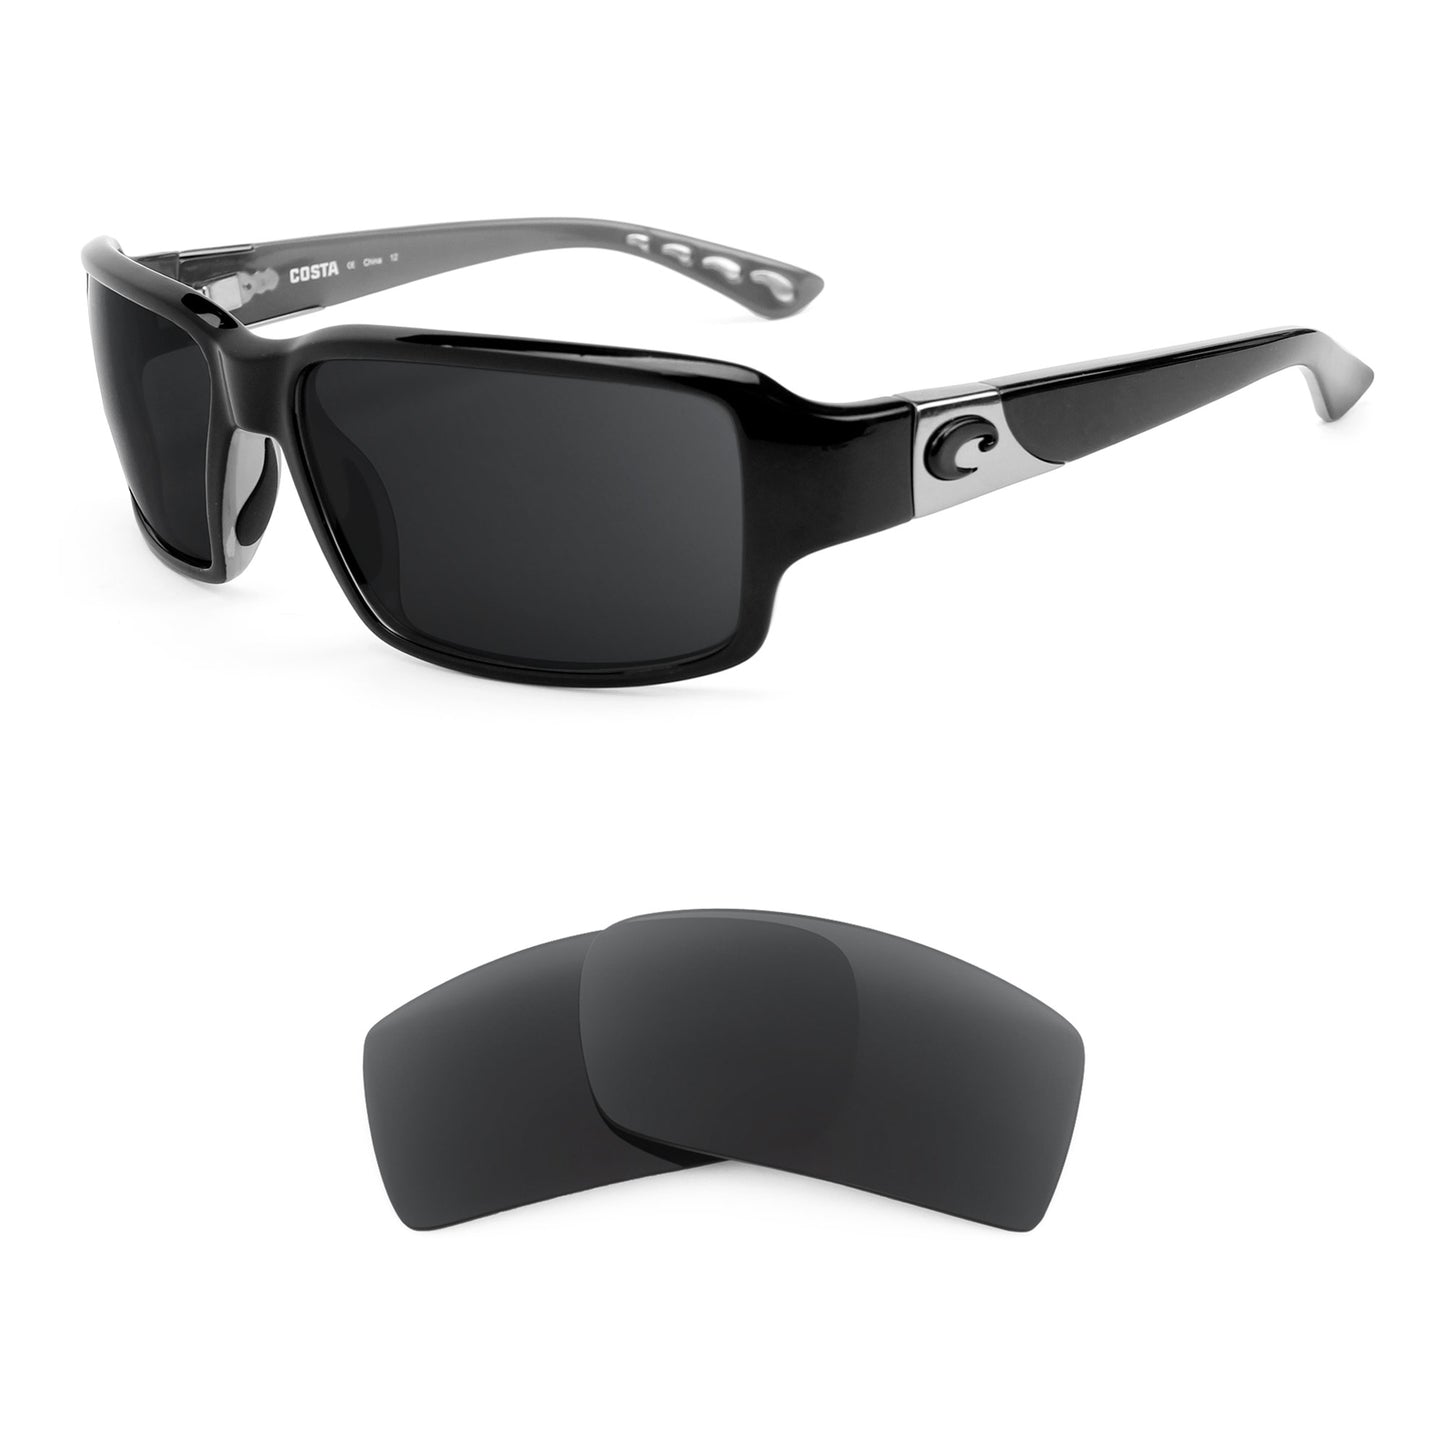 Costa Peninsula sunglasses with replacement lenses